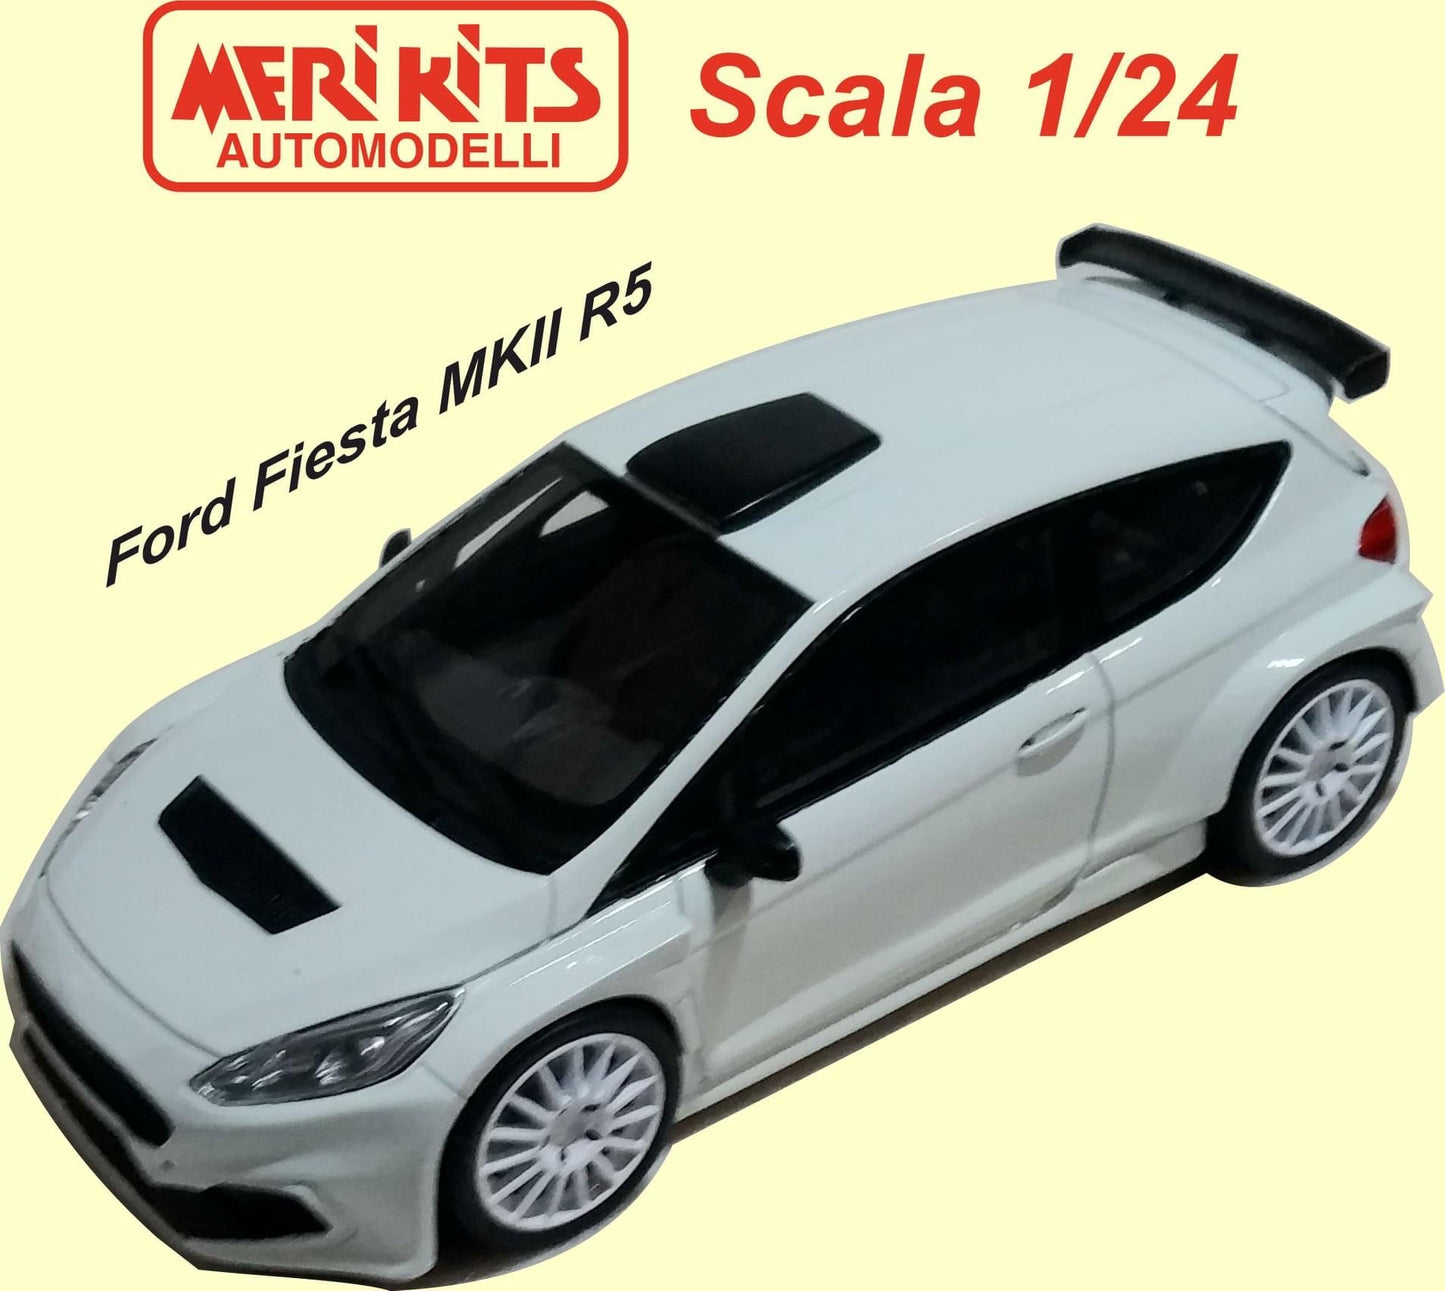 FORD FIESTA MKII R5 RALLY CAR - RESIN KIT